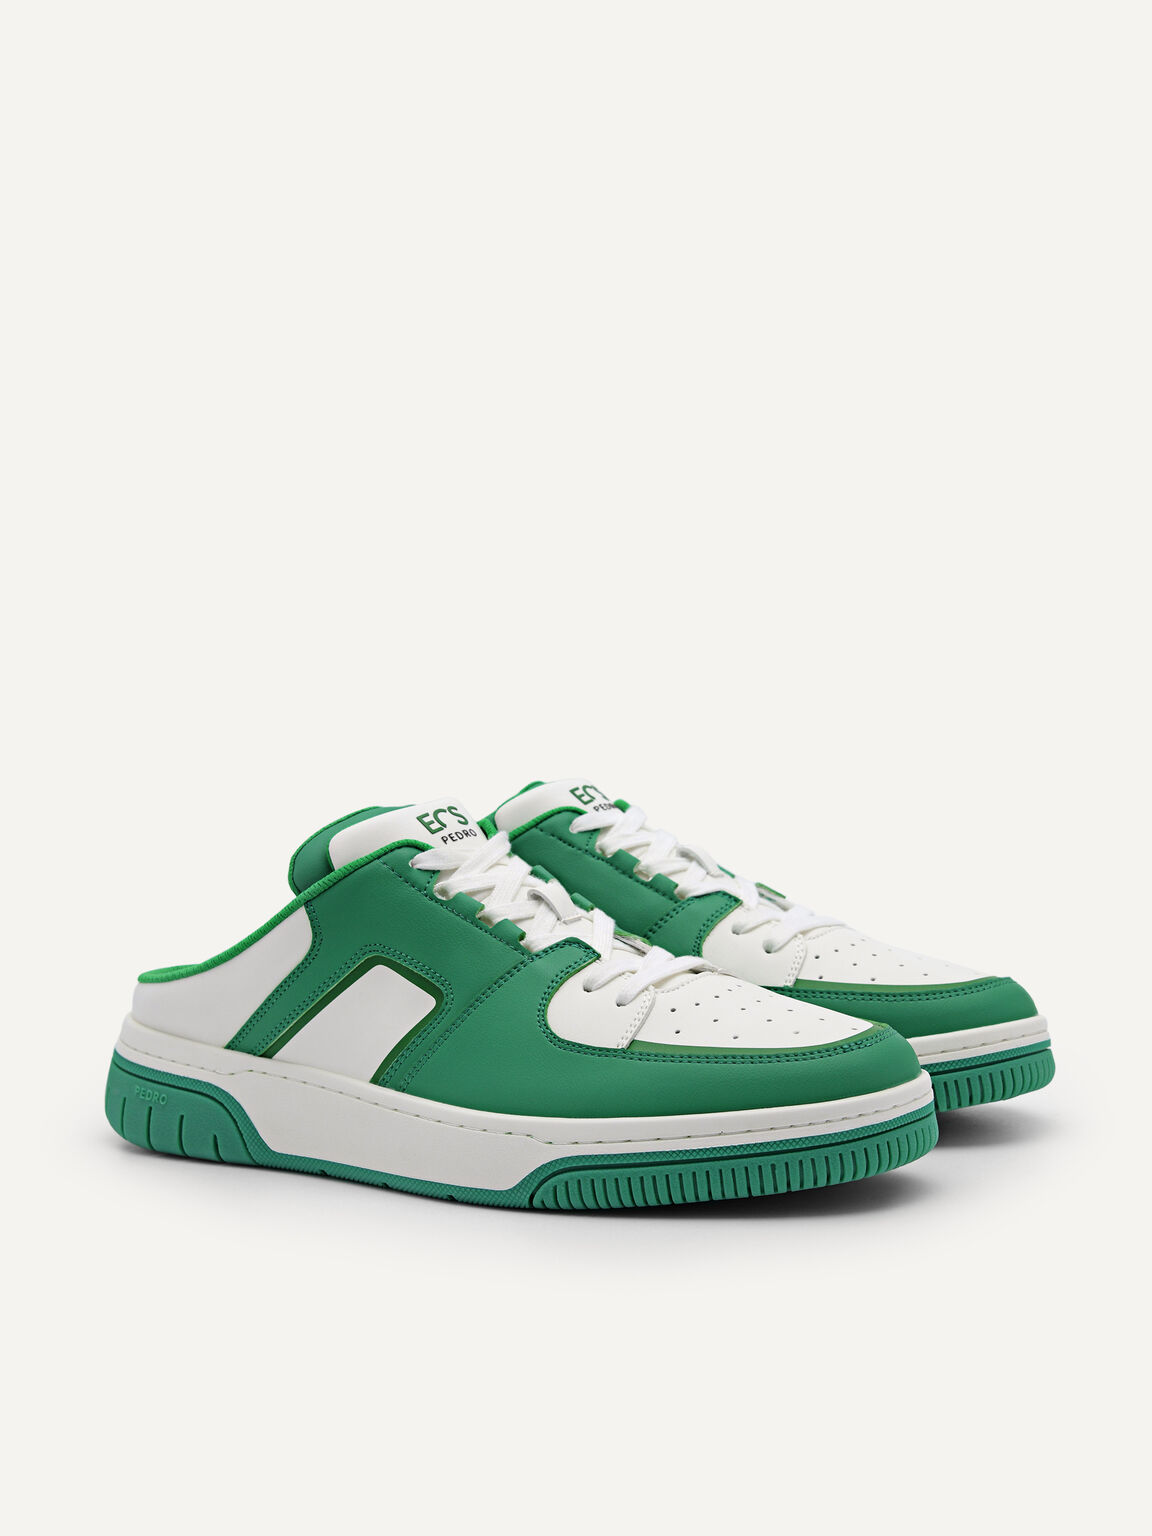 EOS Slip-On Sneakers, Green